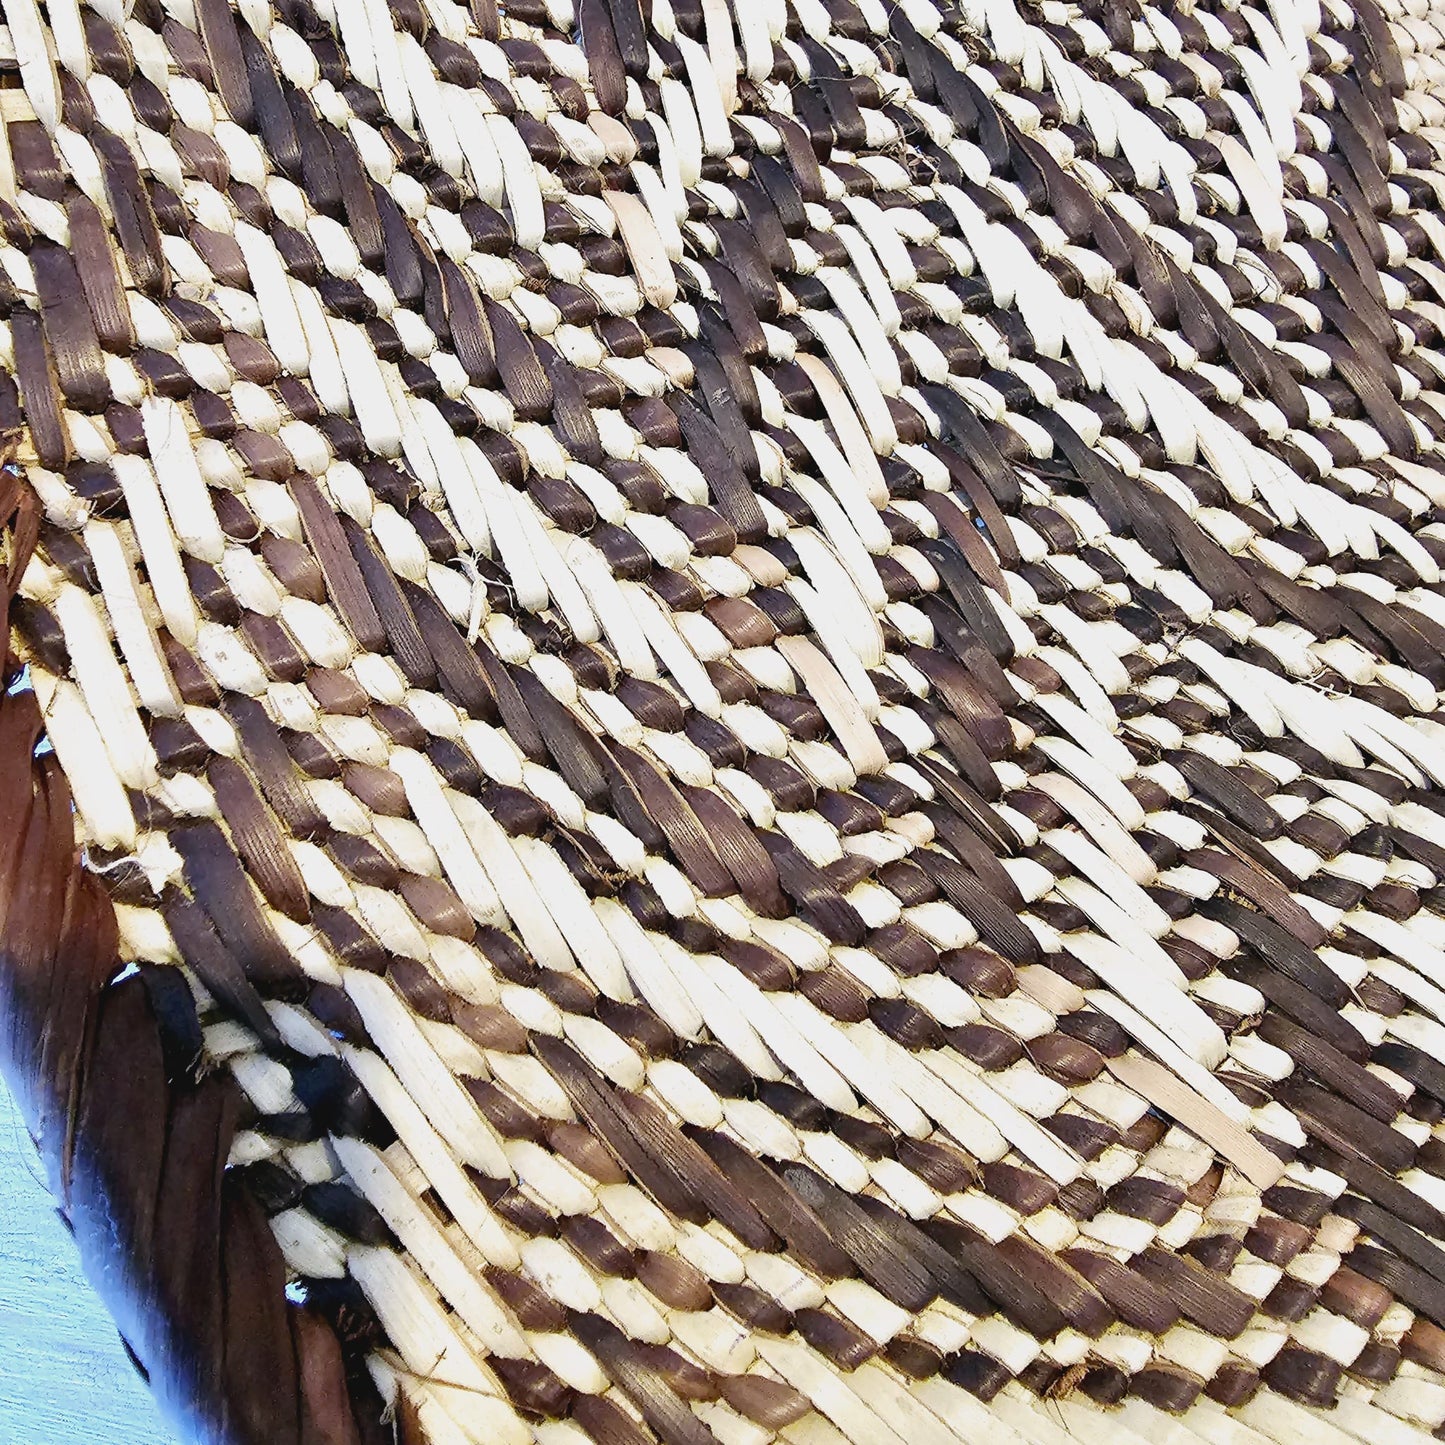 Large | 50cm | Handmade African Wall Baskets | Zimbabwe Baskets | Boho Wall Decor